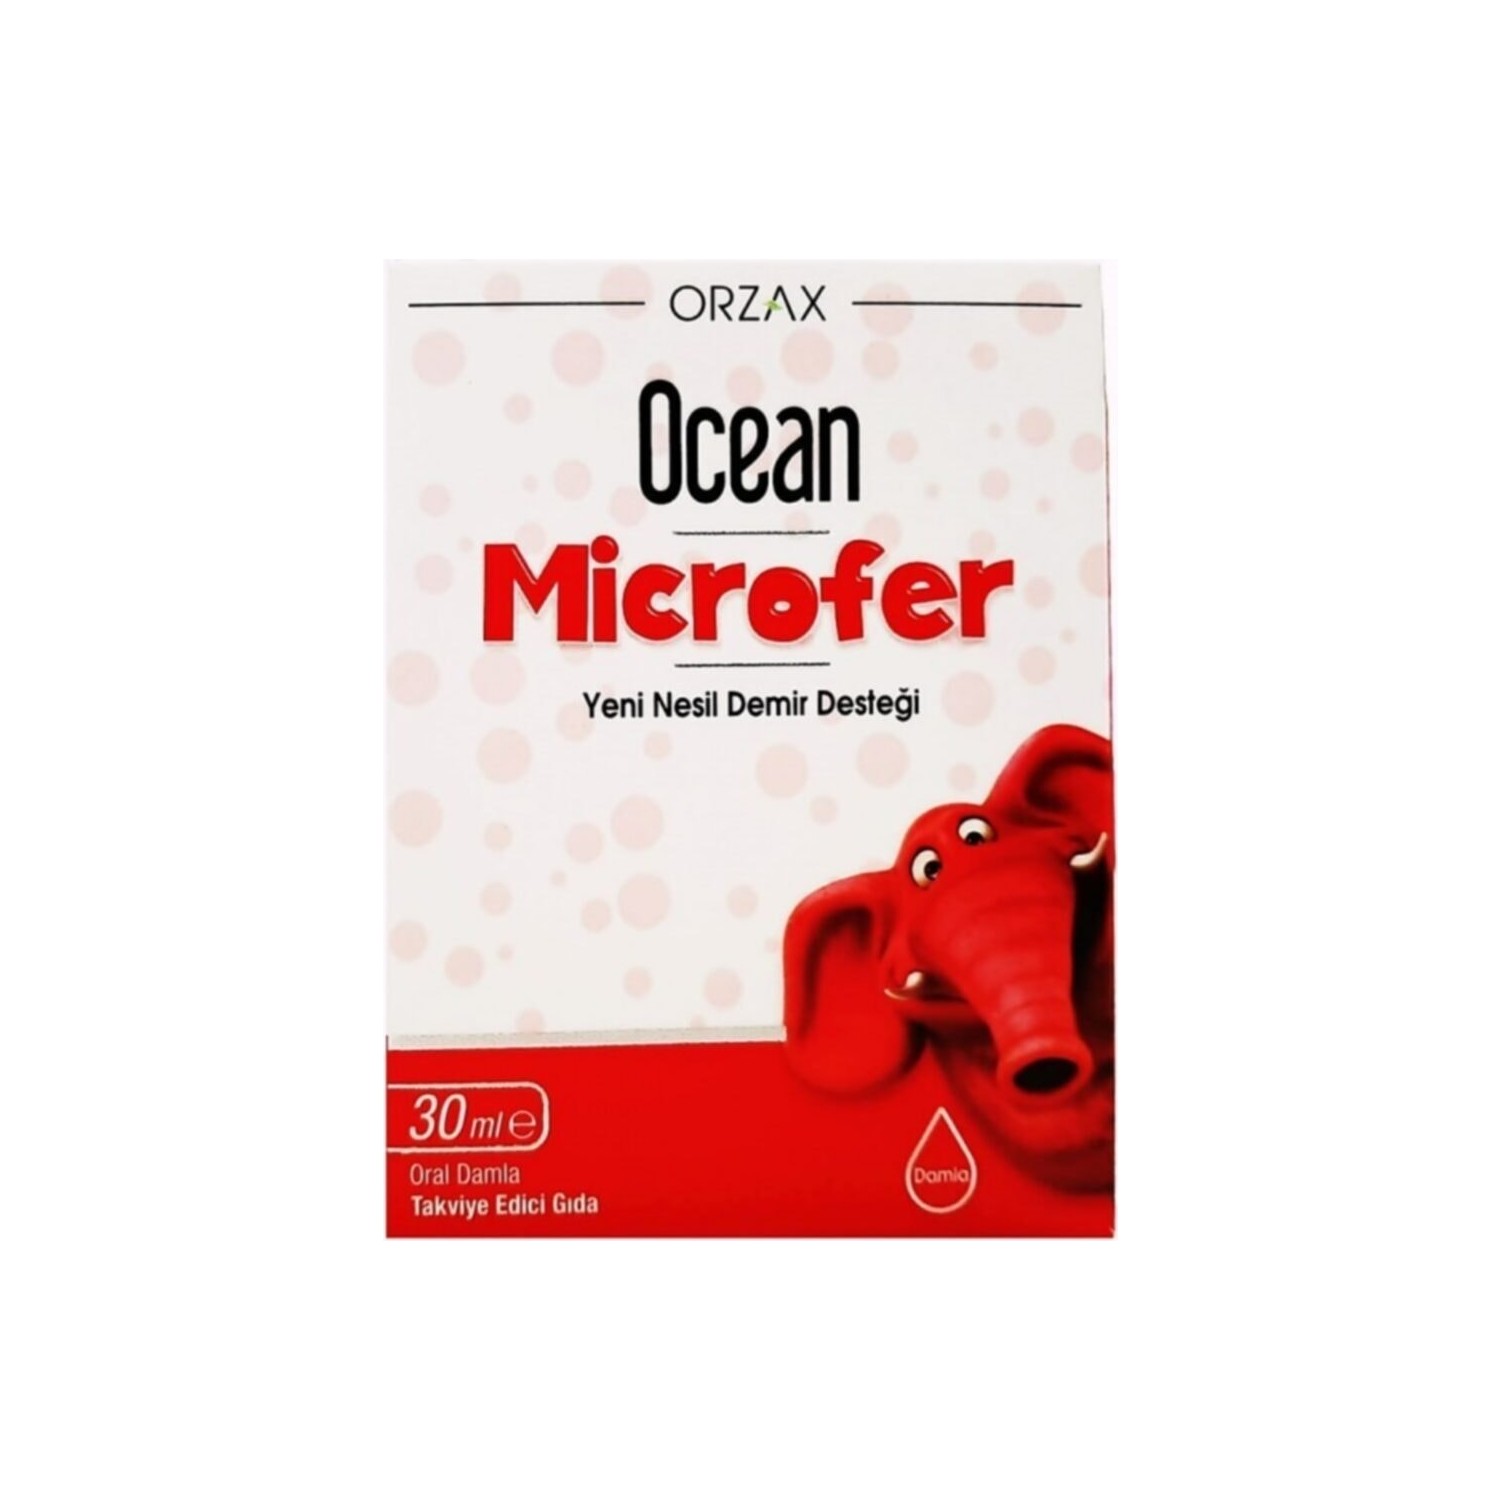 Капли Ocean Orzax Microfer, 30 мл сушка момент для сияния orly flash dry drops 18 мл